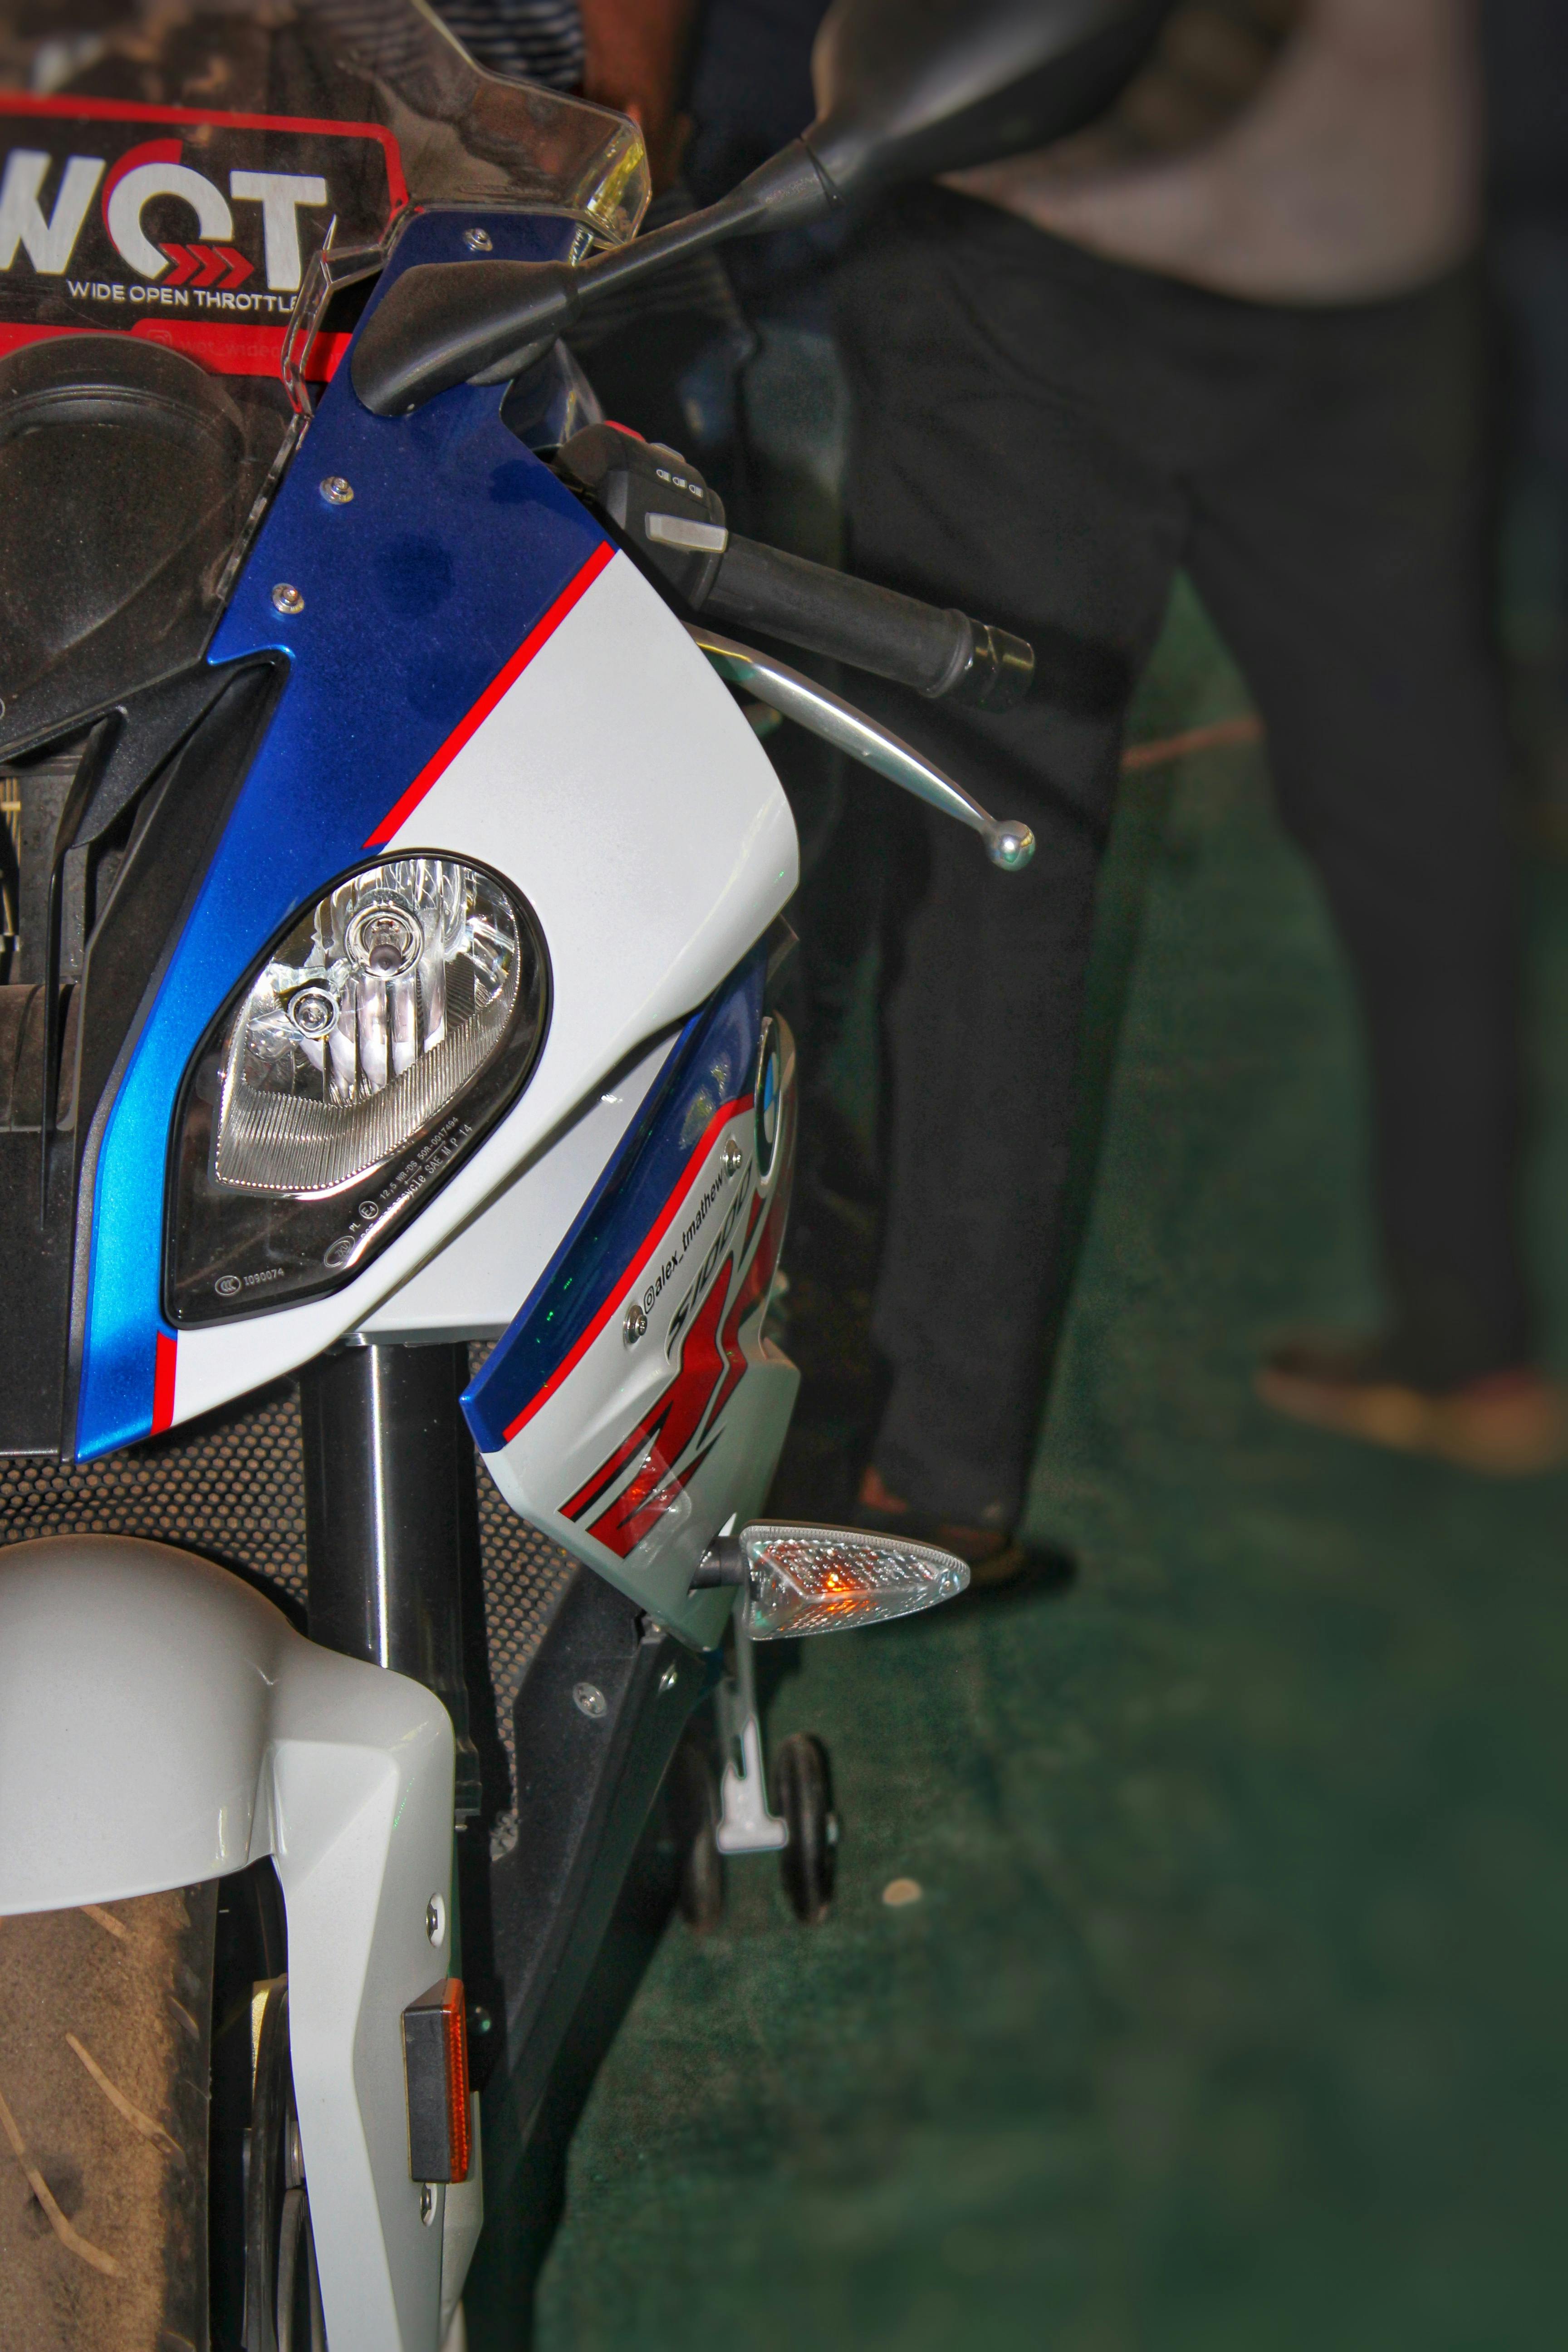 Free stock photo of bike, blurred background, BMW